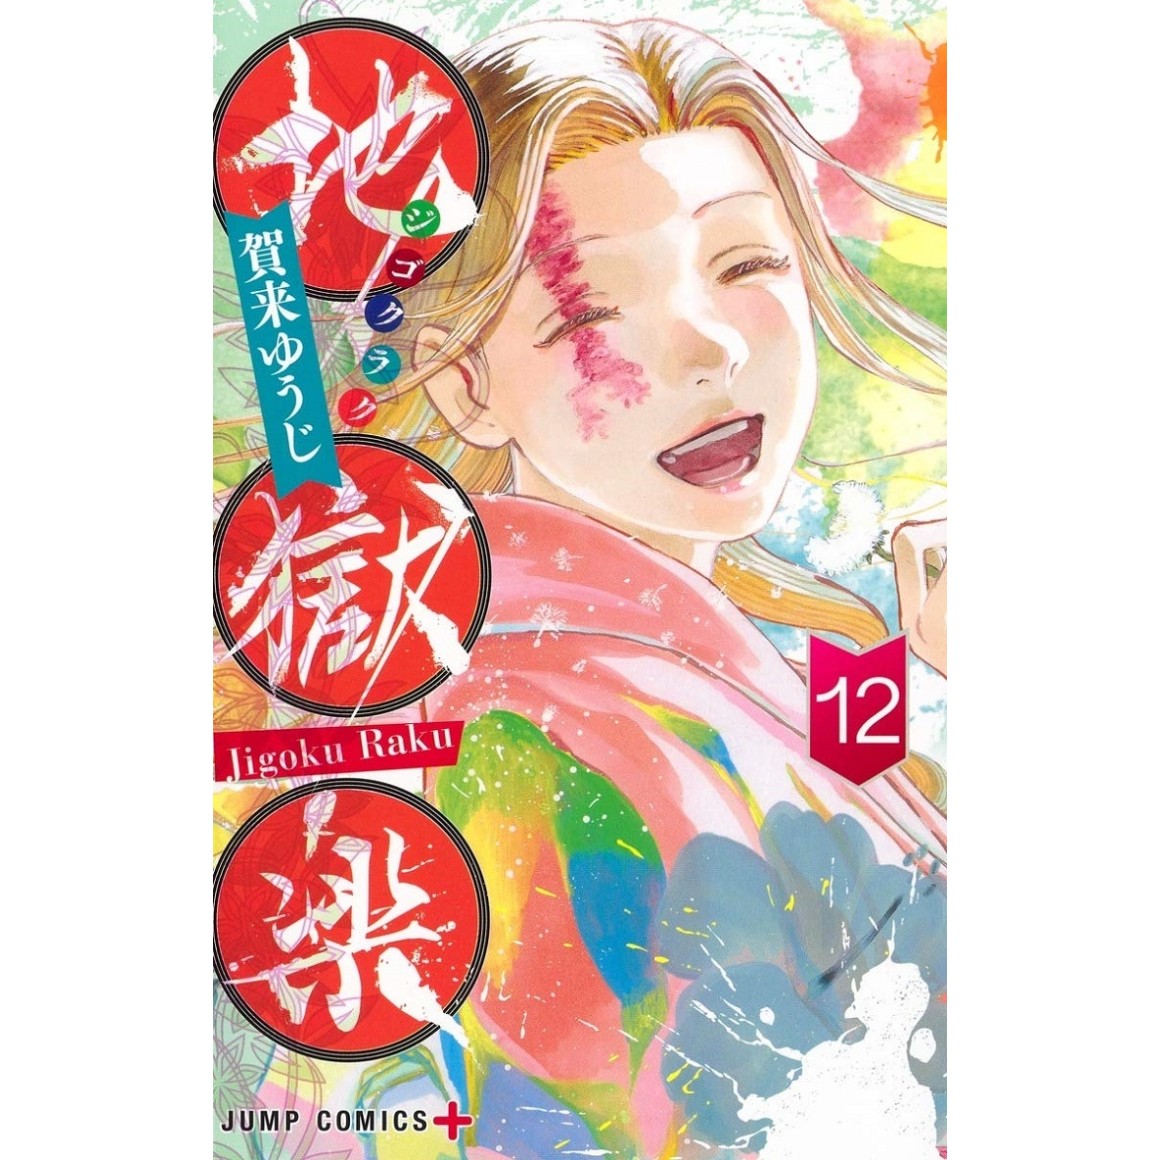 Hells Paradise: Jigokuraku Manga Volume 11